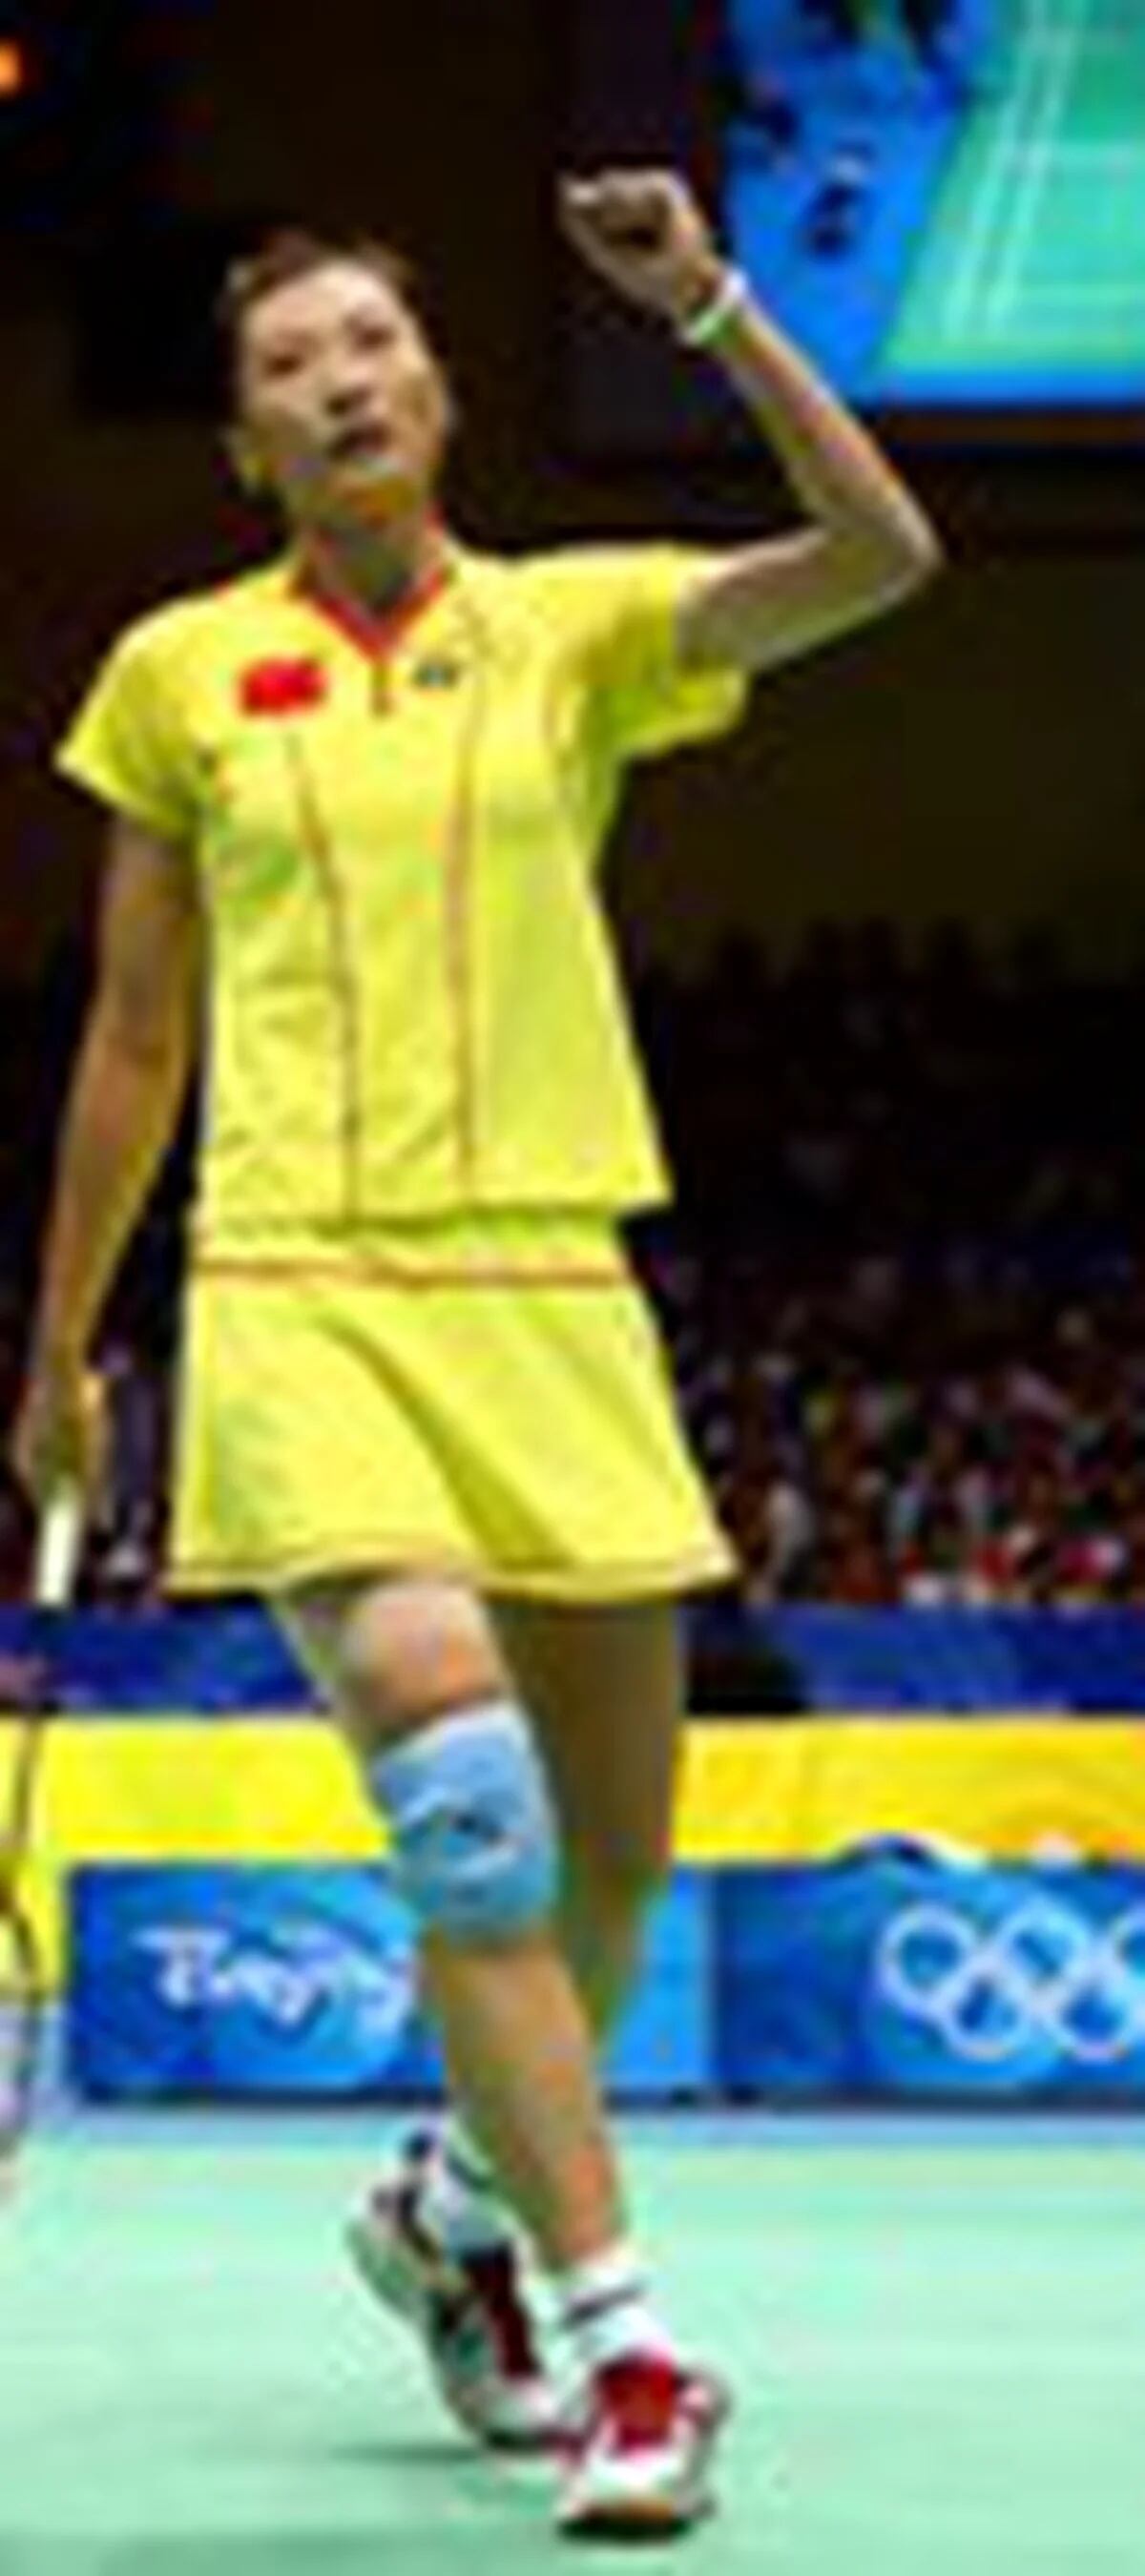 Badminton Dress Code for Women Criticized as Sexist - The New York